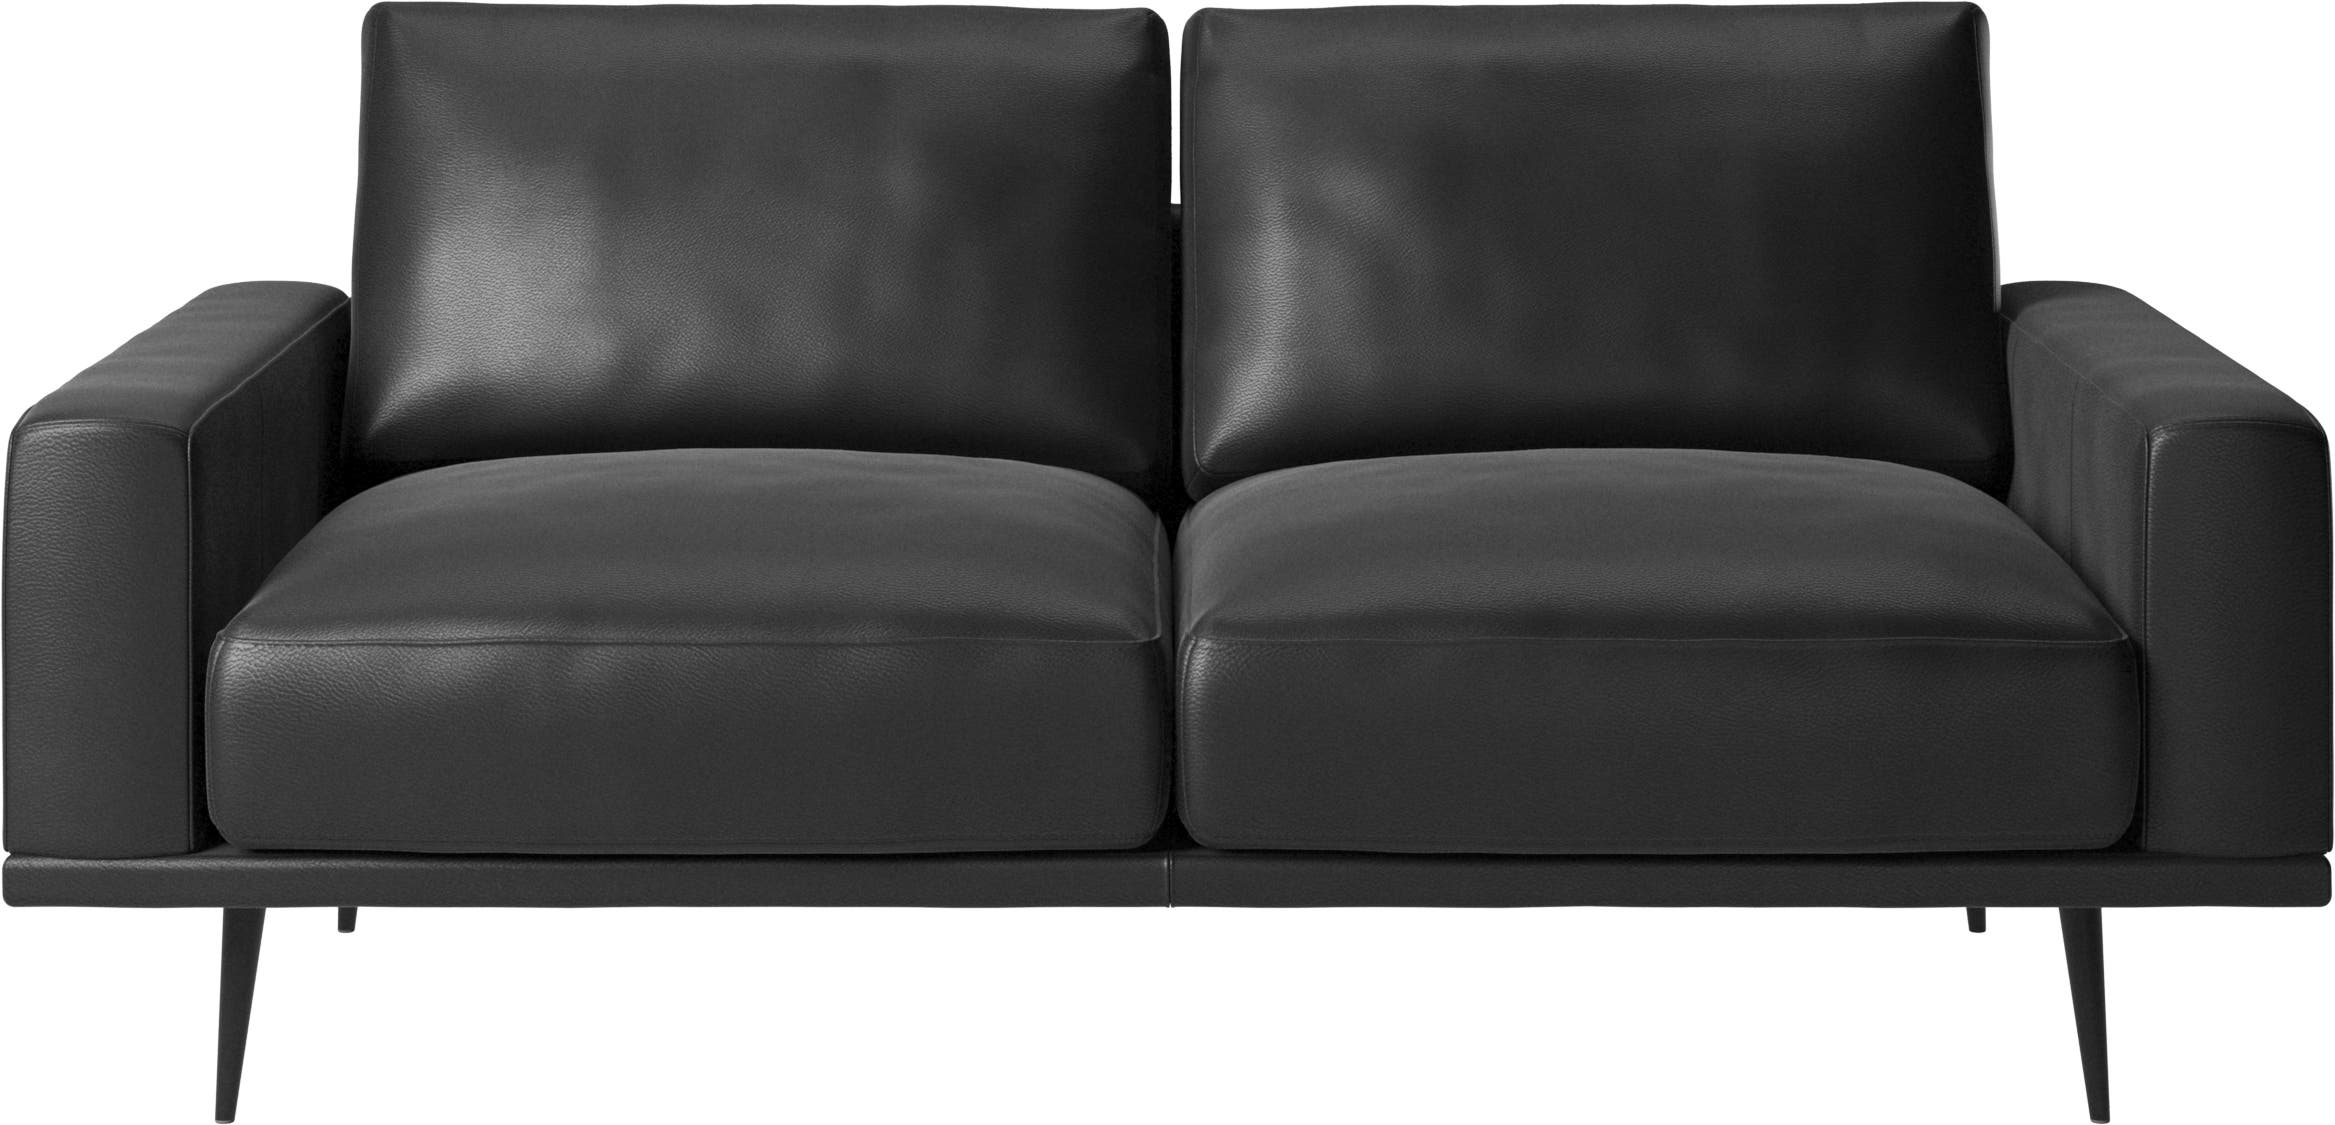 Sofa Carlton